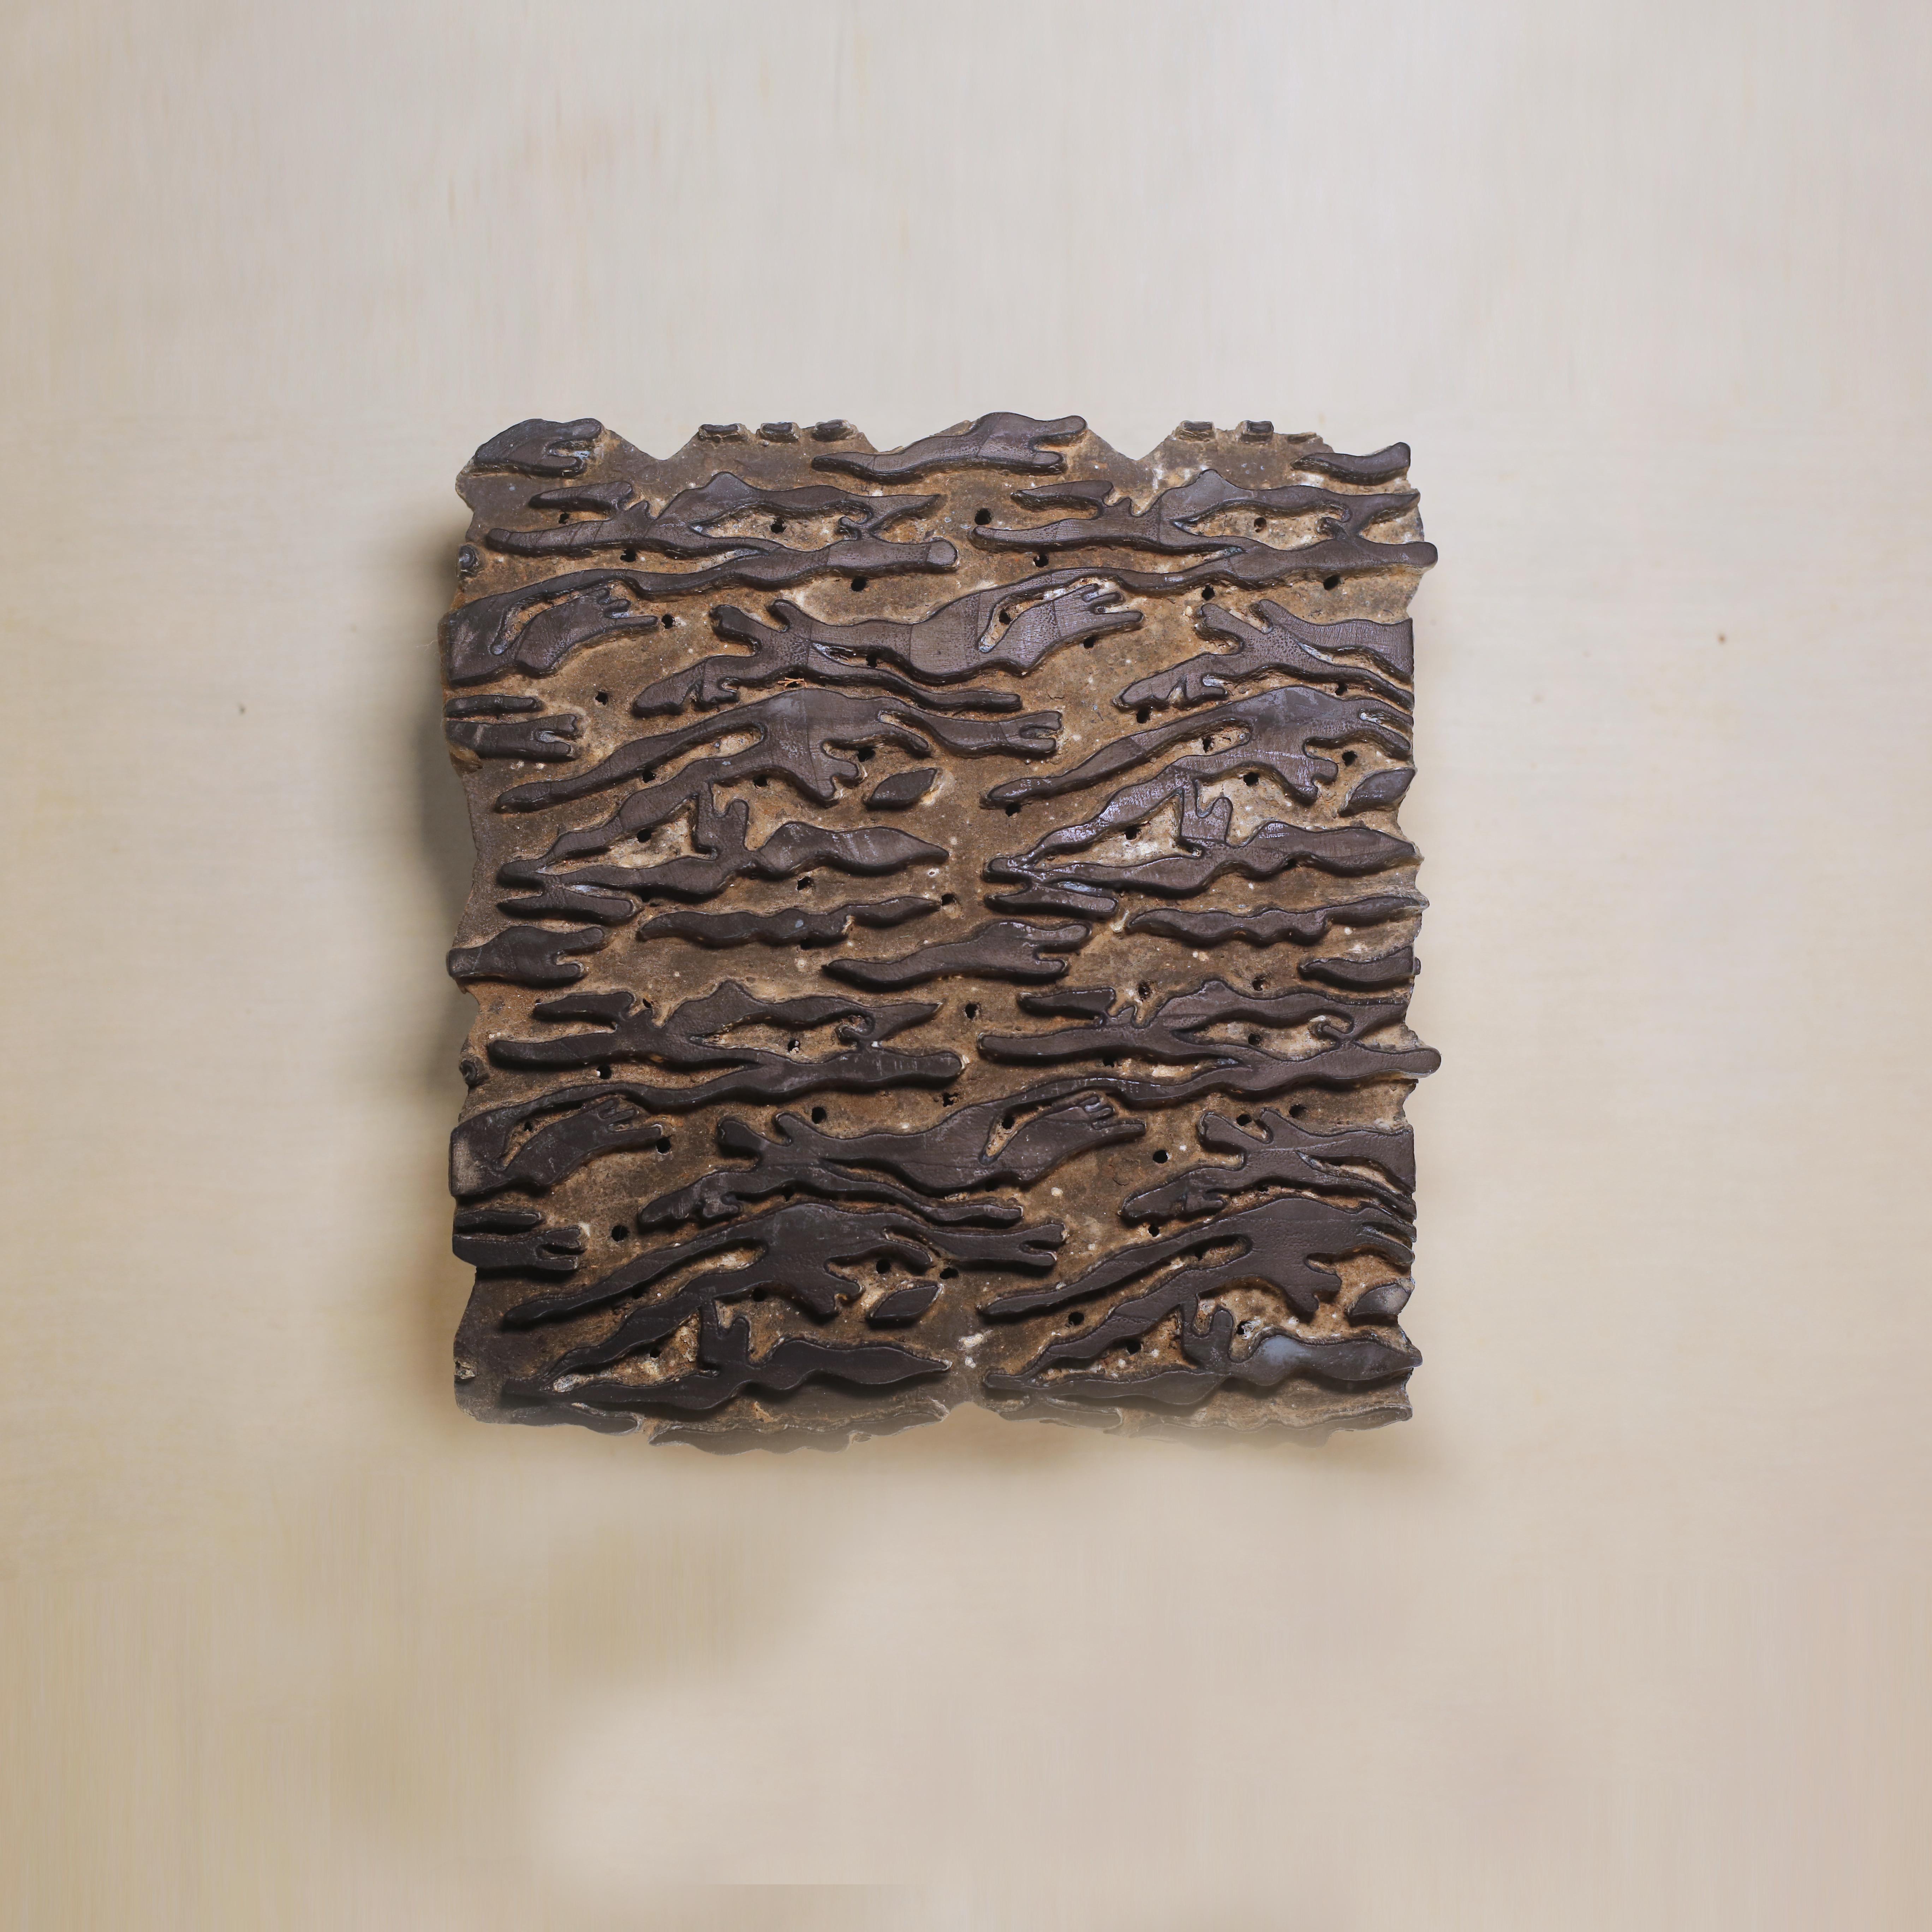 Woodblock-Printed Cotton - Tiger Print - Printed With Black Iron Rust Dye - Block